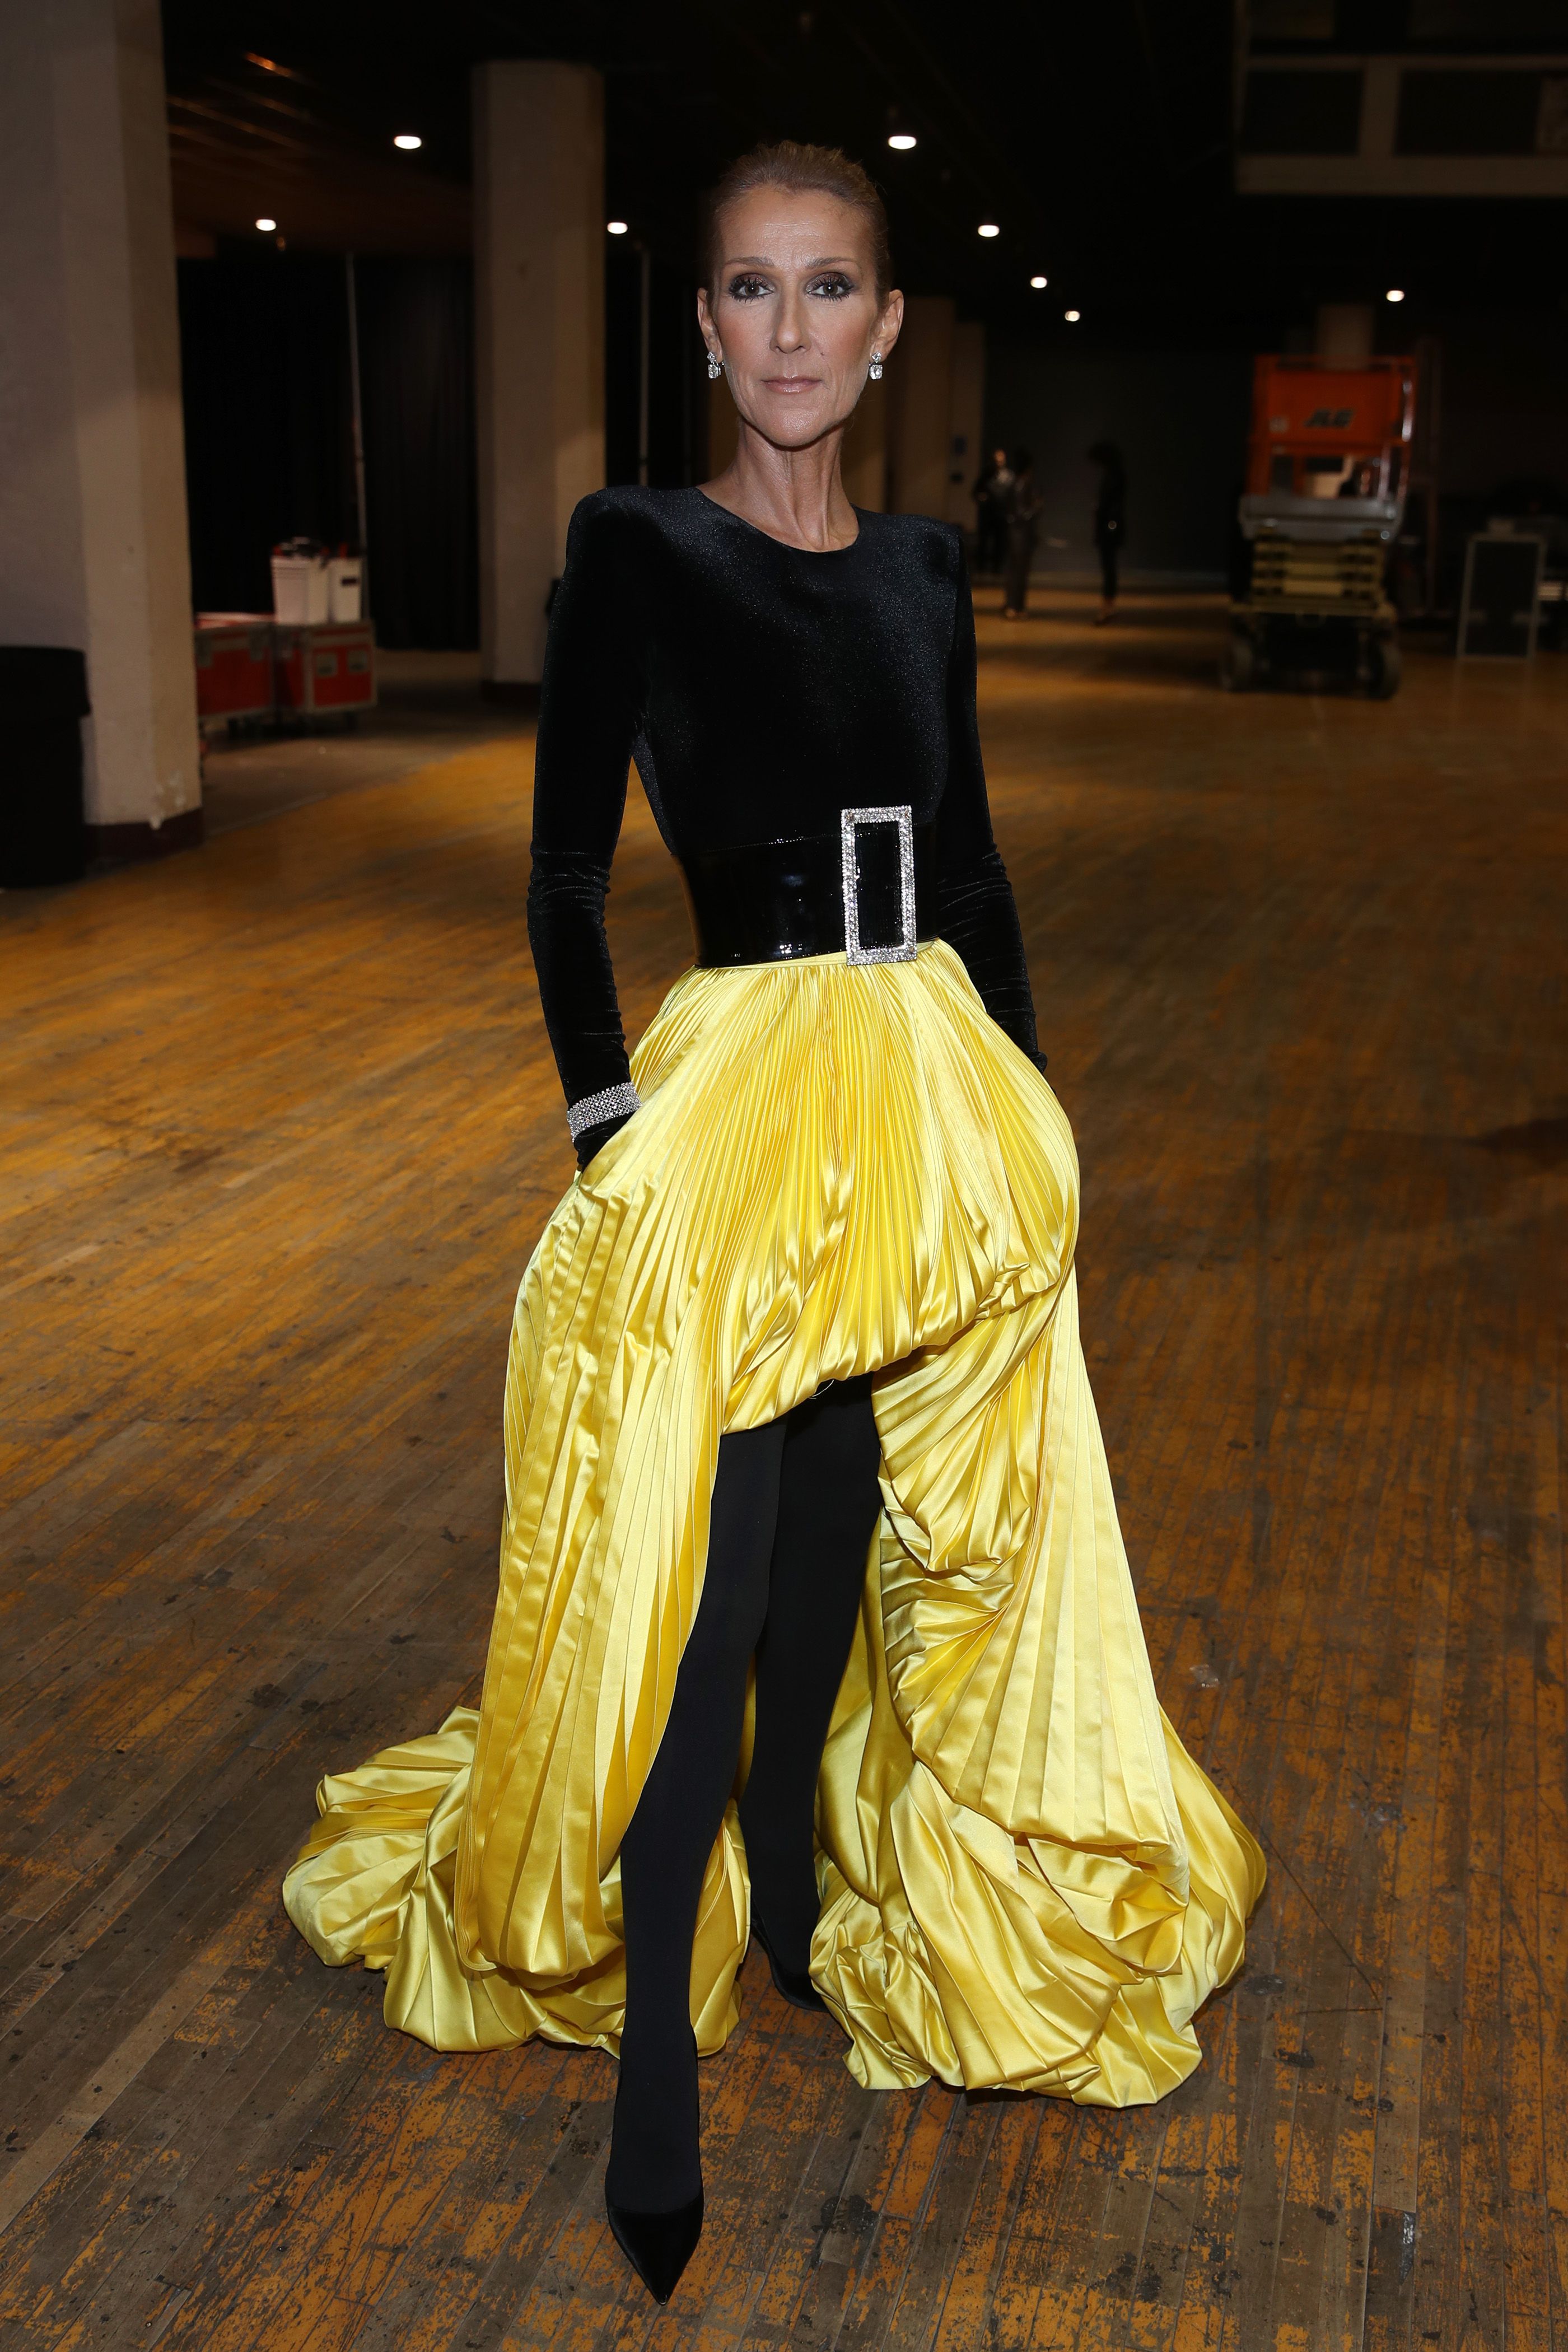 Photos from Céline Dion's Best Looks